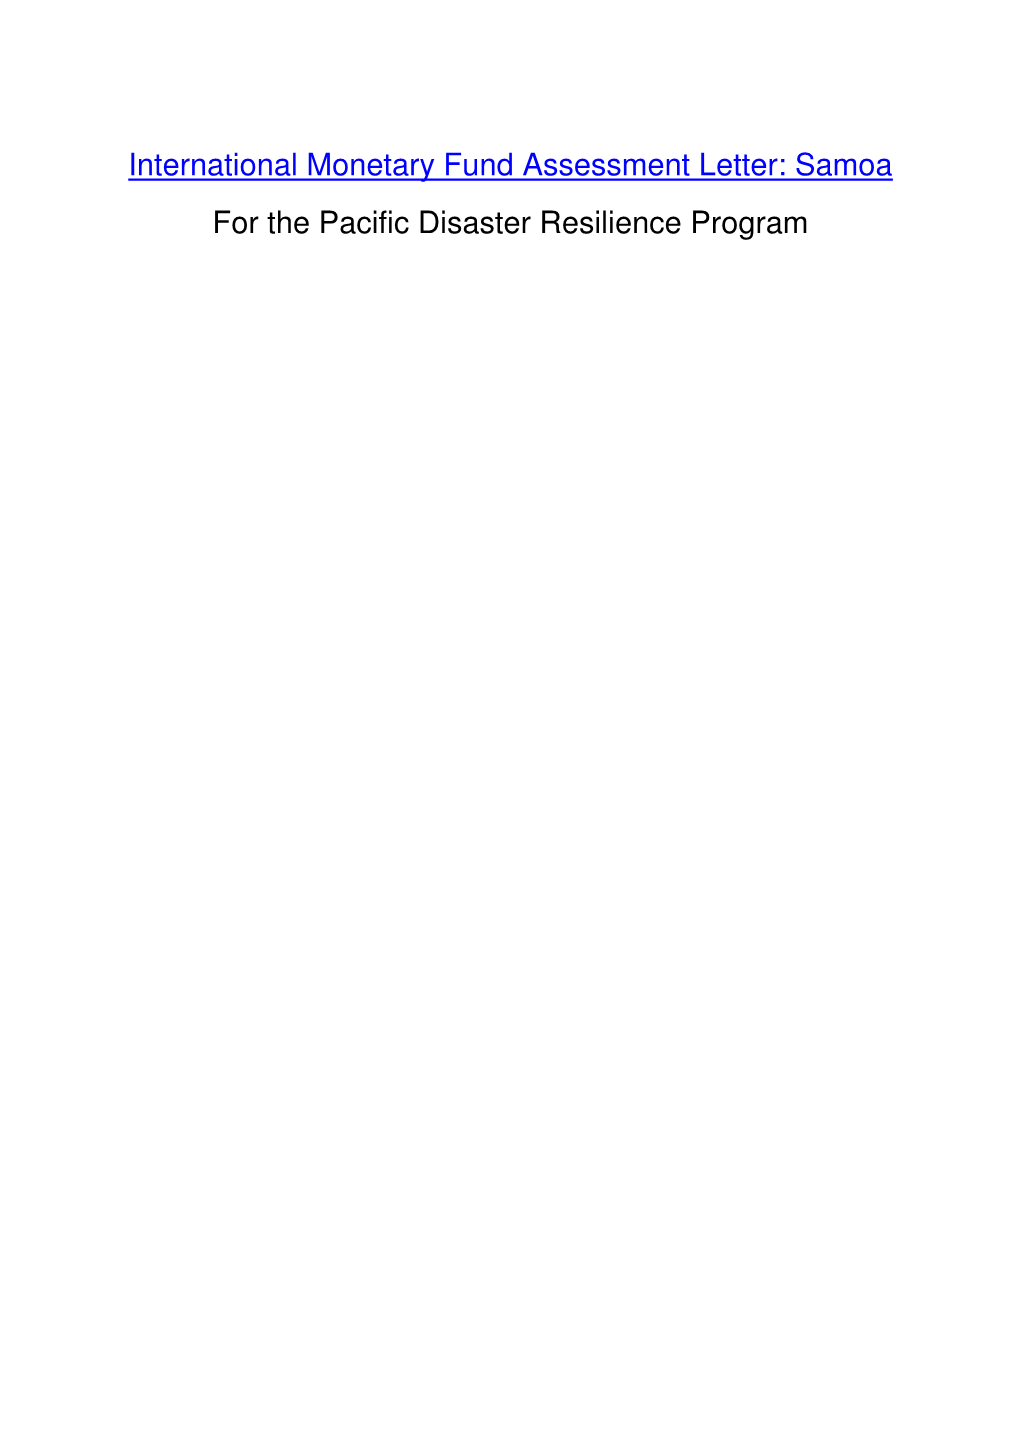 Samoa for the Pacific Disaster Resilience Program